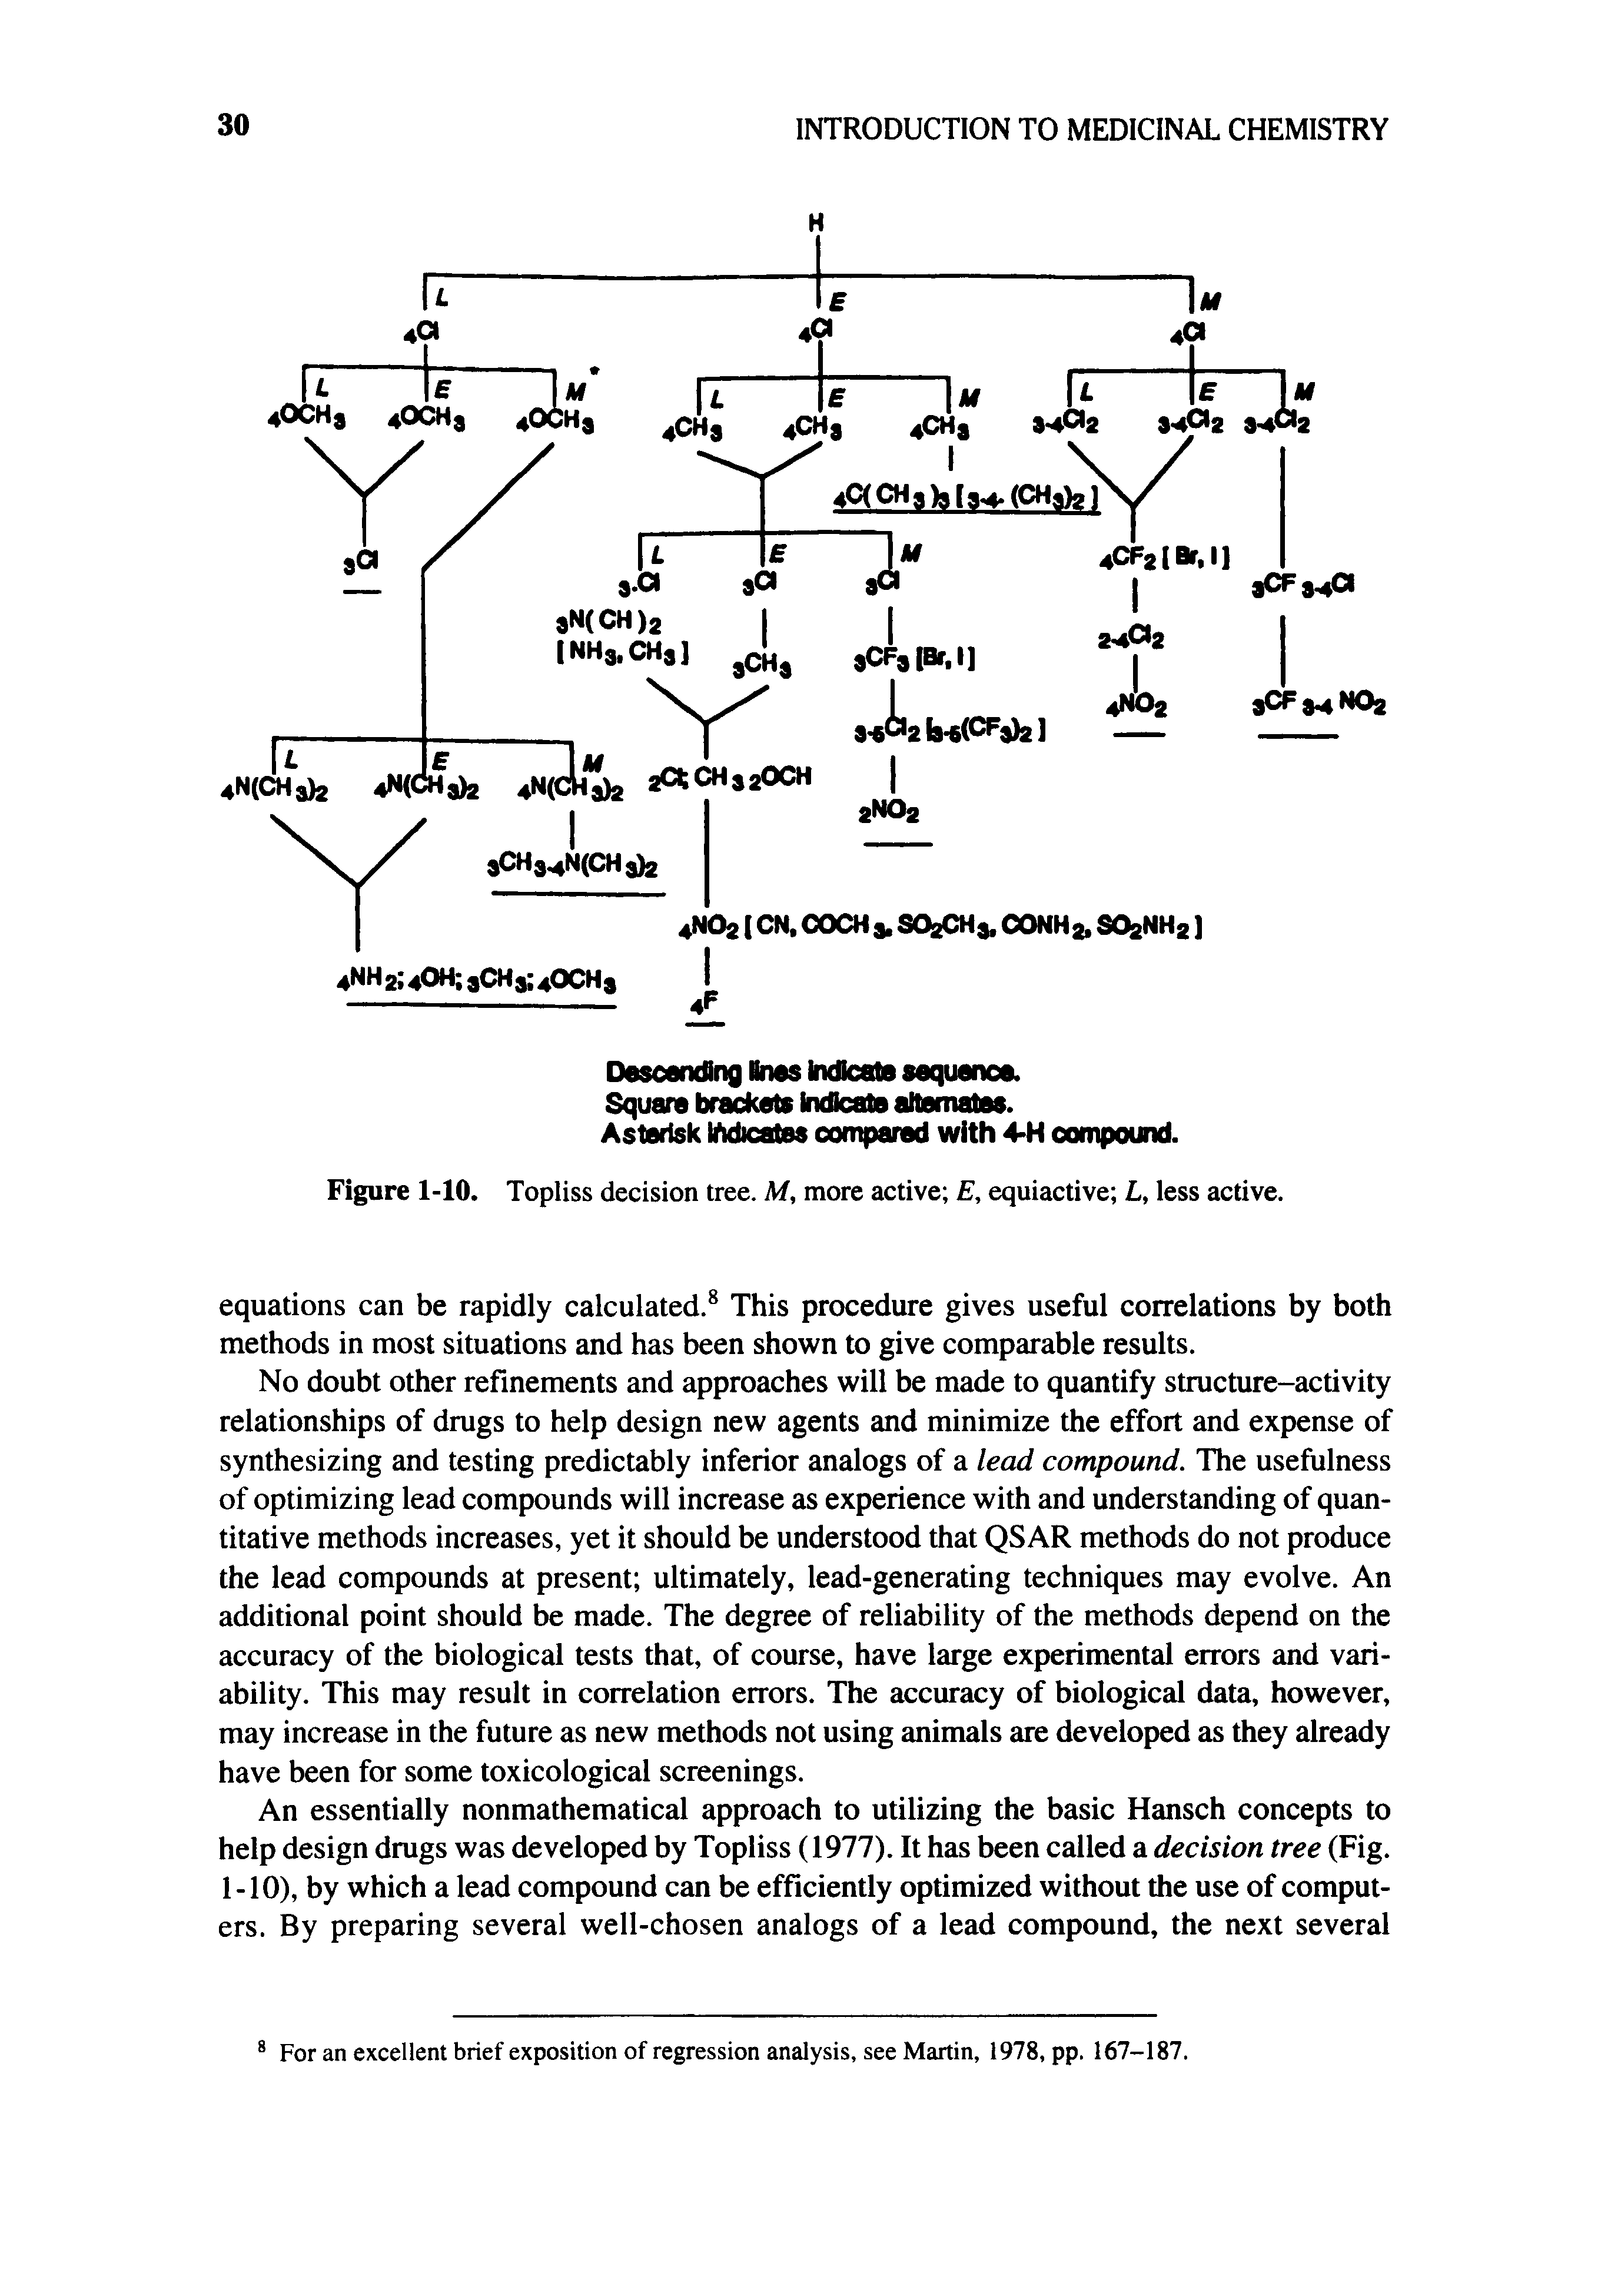 Figure 1-10. Topliss decision tree. M, more active E, equiactive L, less active.